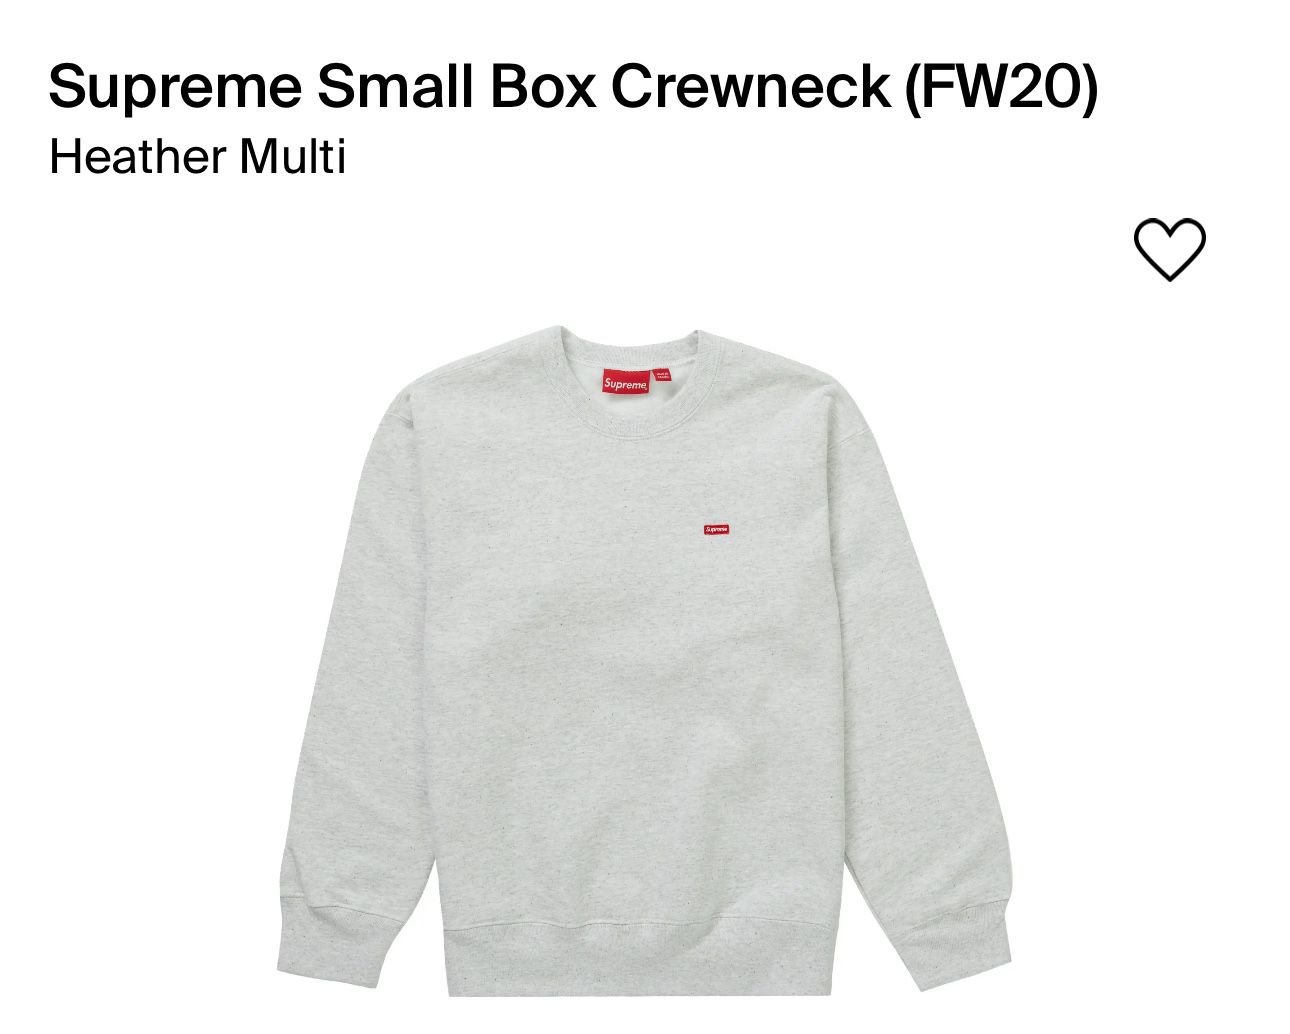 Supreme Small Box Crewneck Heather Multi - NEVER USED for Sale in